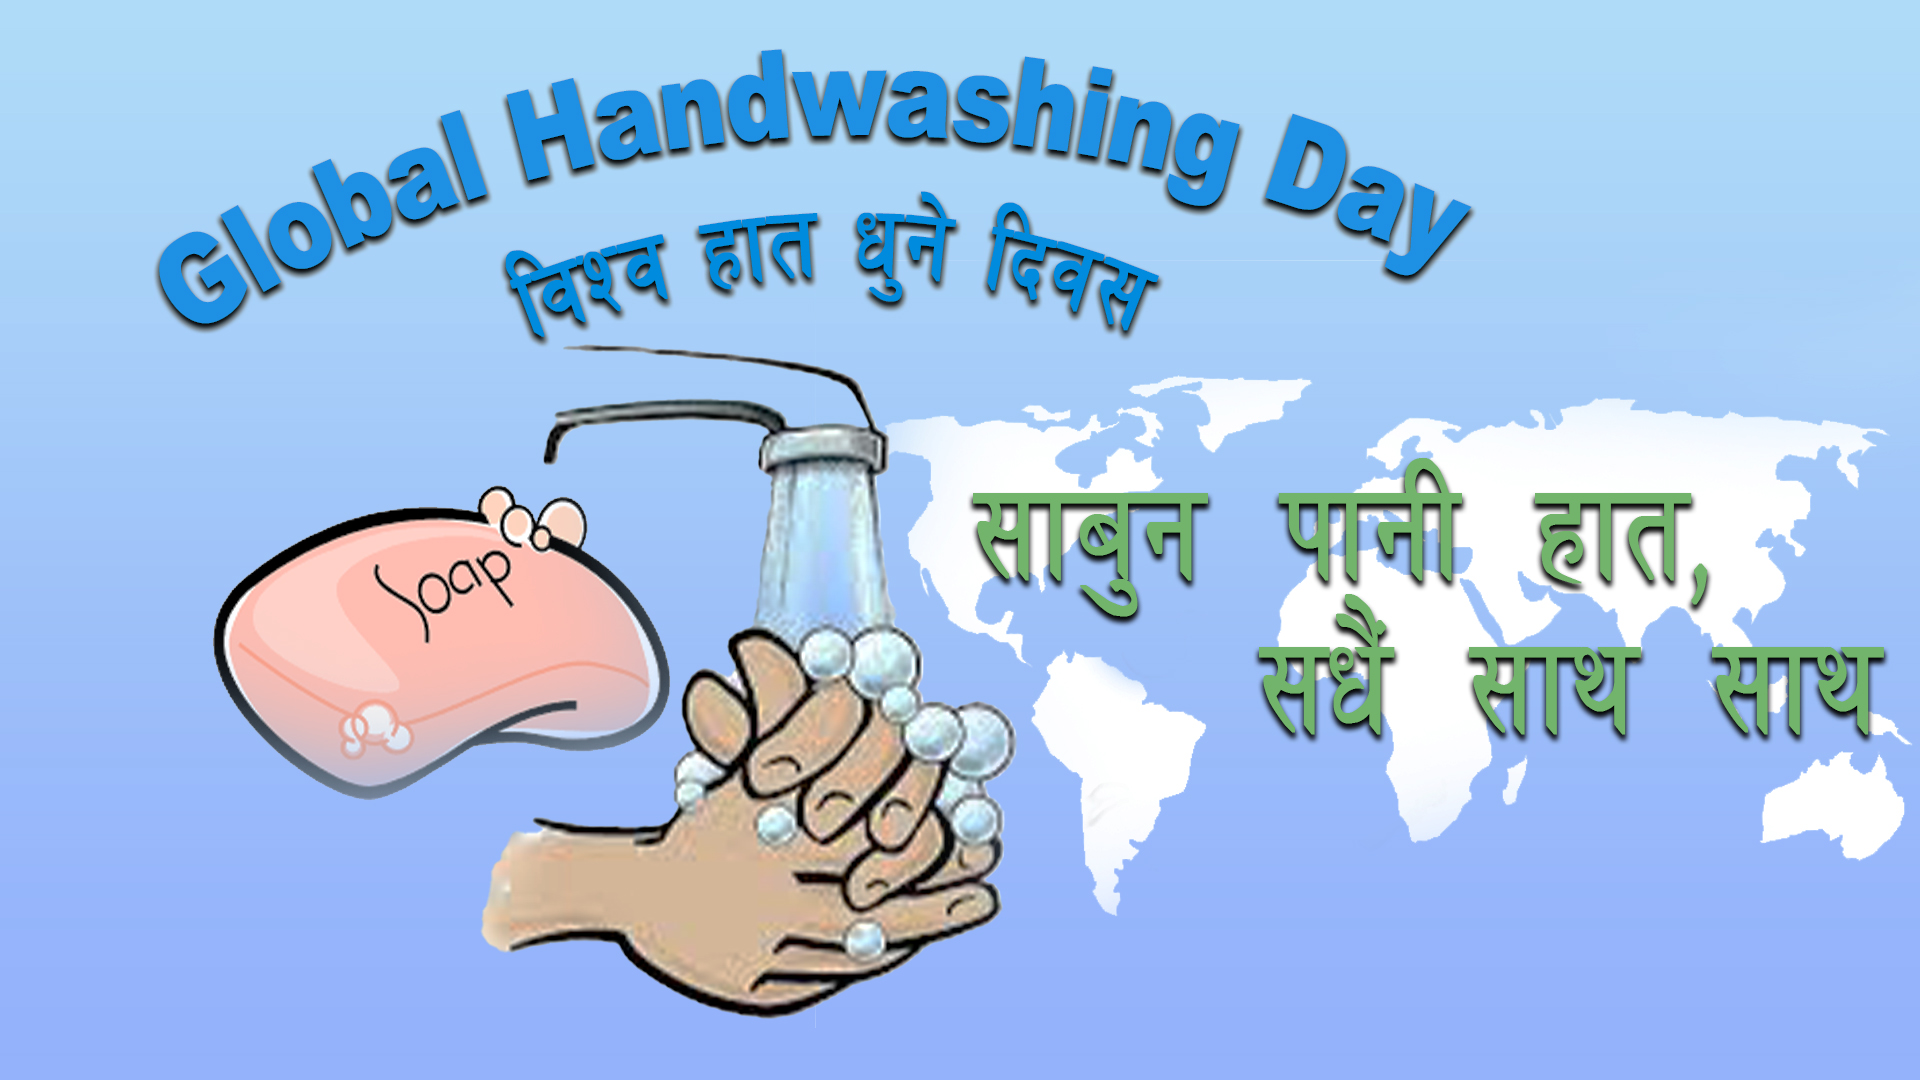 World Handwashing Day celebrated with a hand washing program